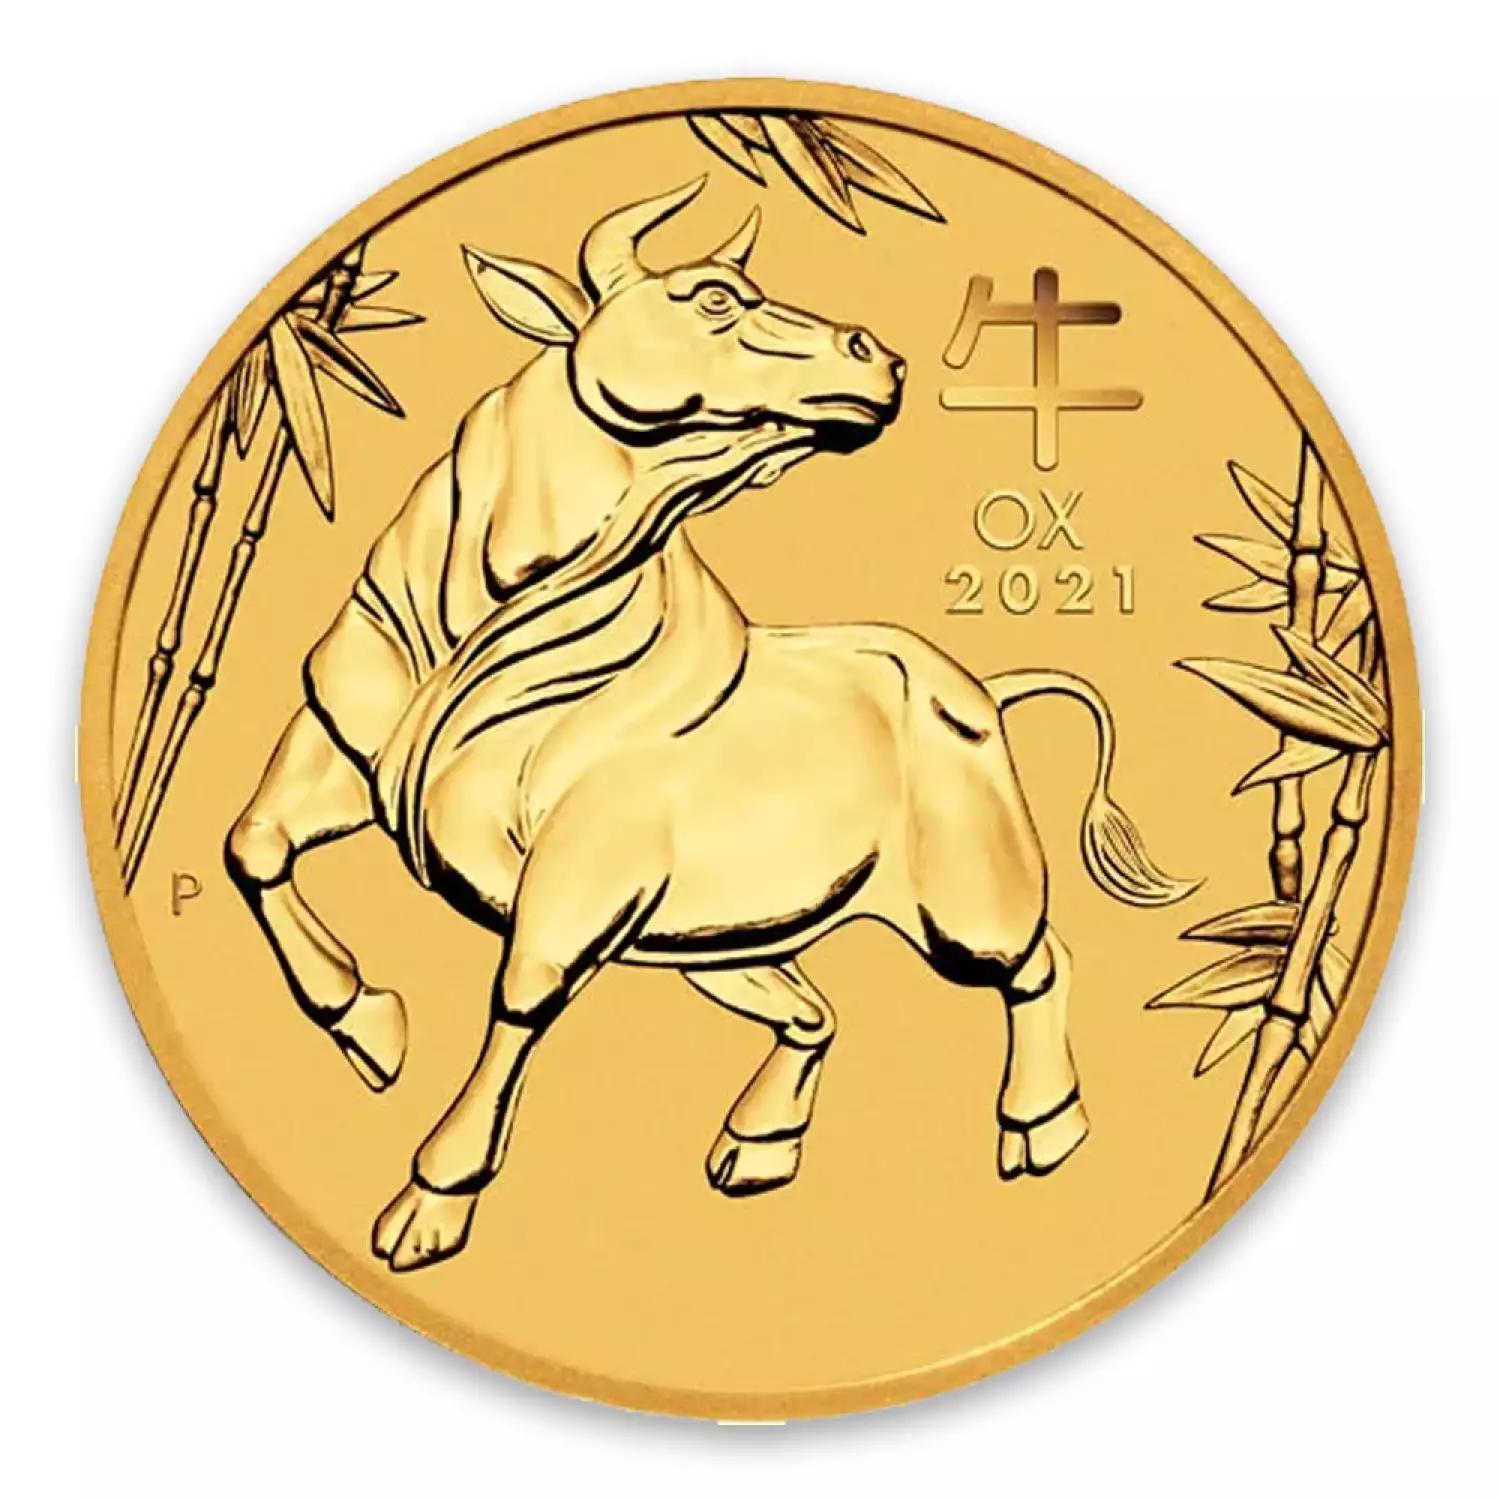 2021 2oz Australian Gold Lunar: Year of the Ox (2)